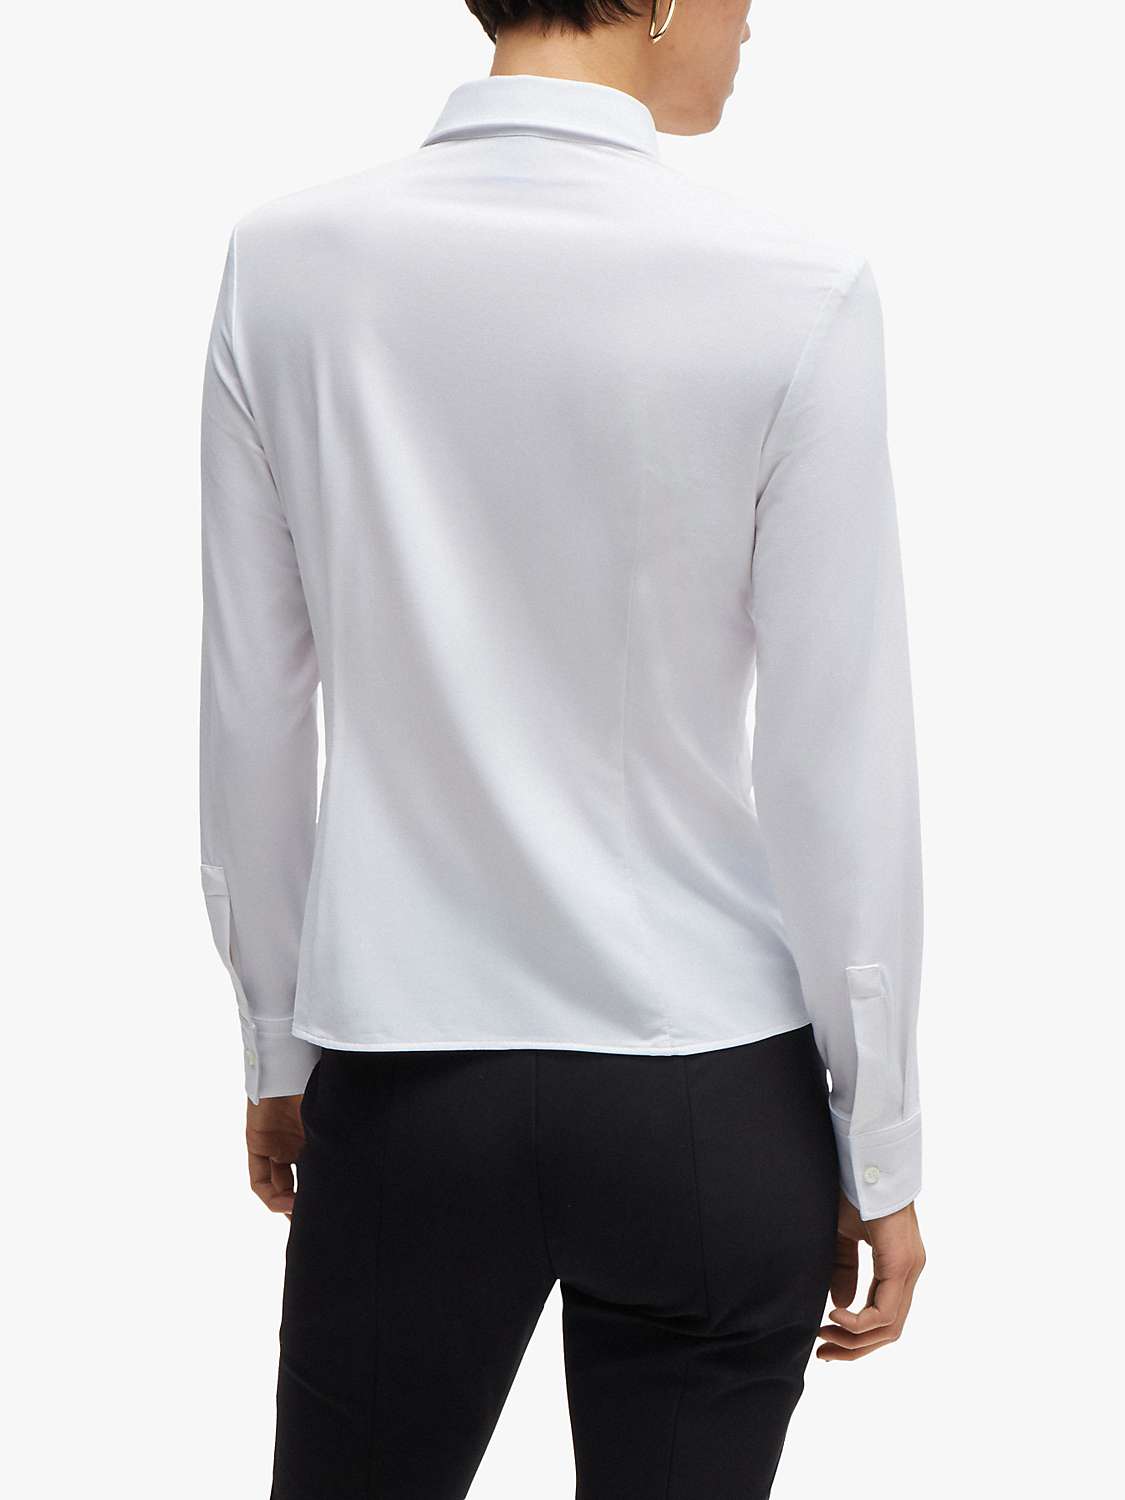 Buy BOSS Boanna 100 Long Sleeve Shirt, White Online at johnlewis.com